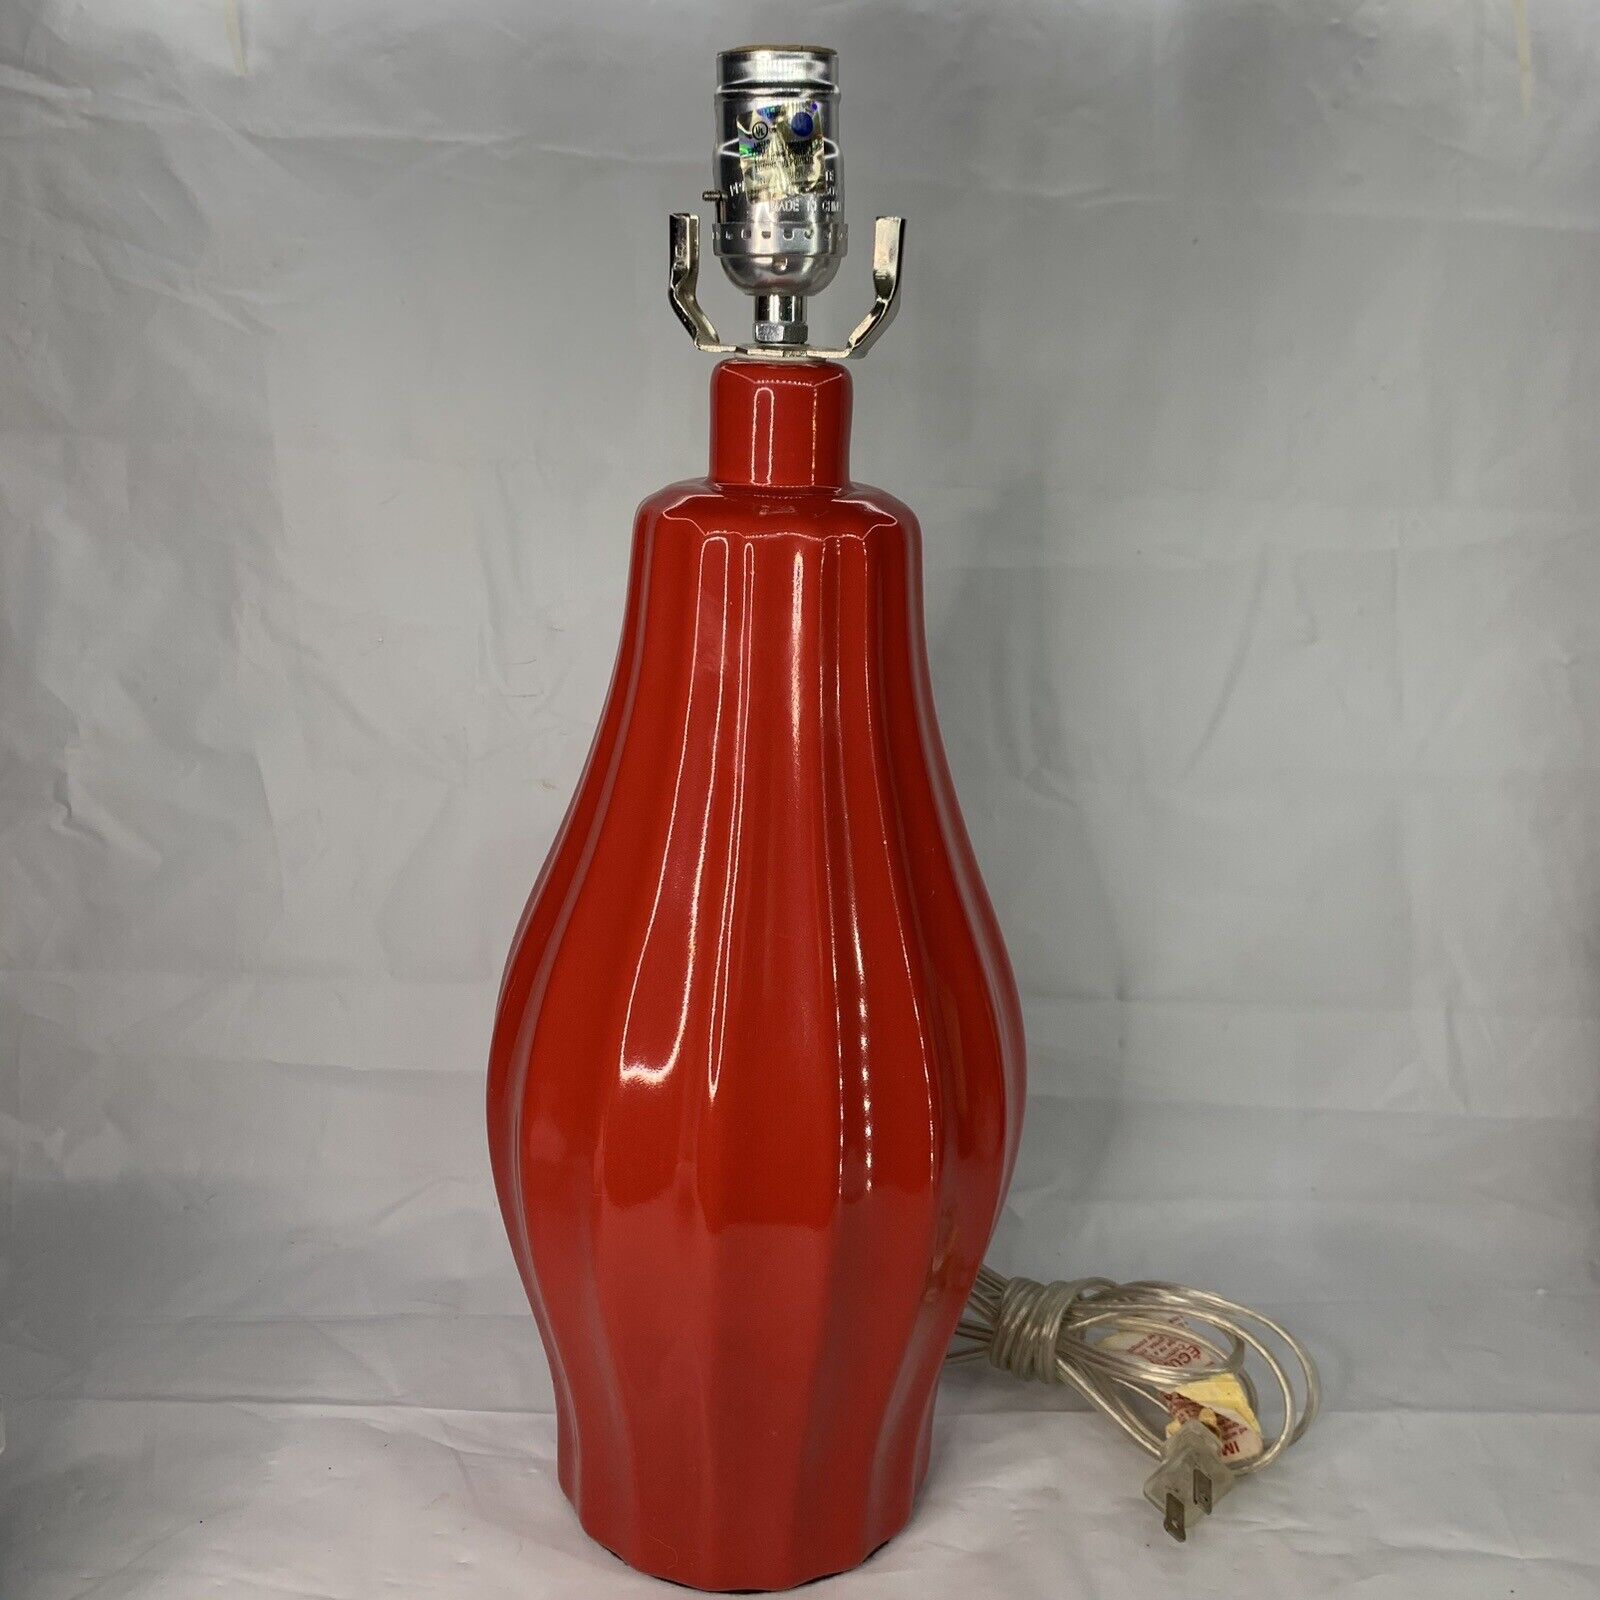 Vintage Royal Haeger Red Ceramic Table Lamp Mid Century Modern Retro 3 Way